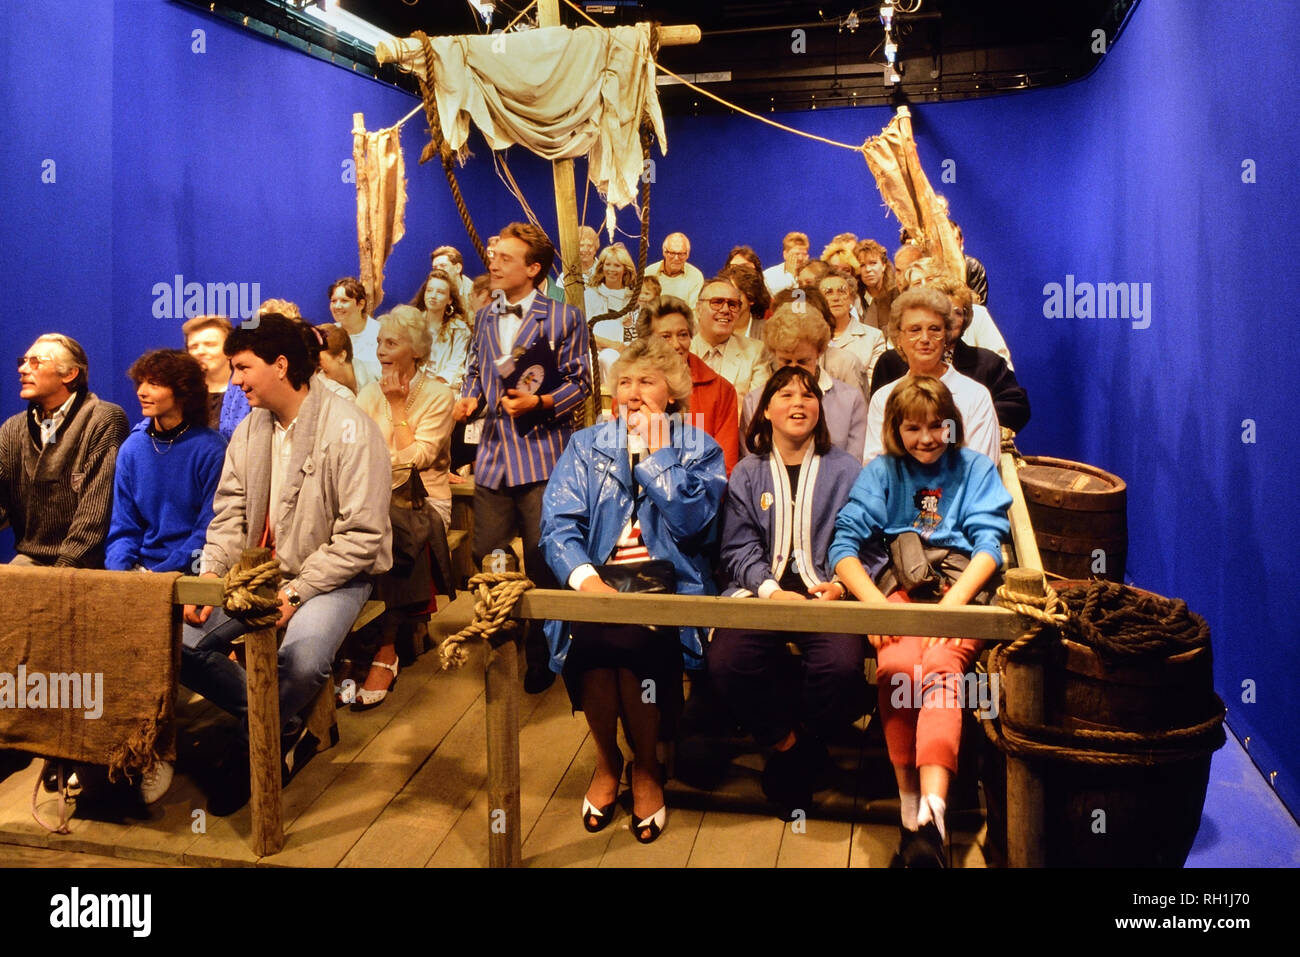 Chromakey prix ride, l'original de Granada Studios Tour, Manchester, Angleterre, Royaume-Uni. Circa 1988 Banque D'Images